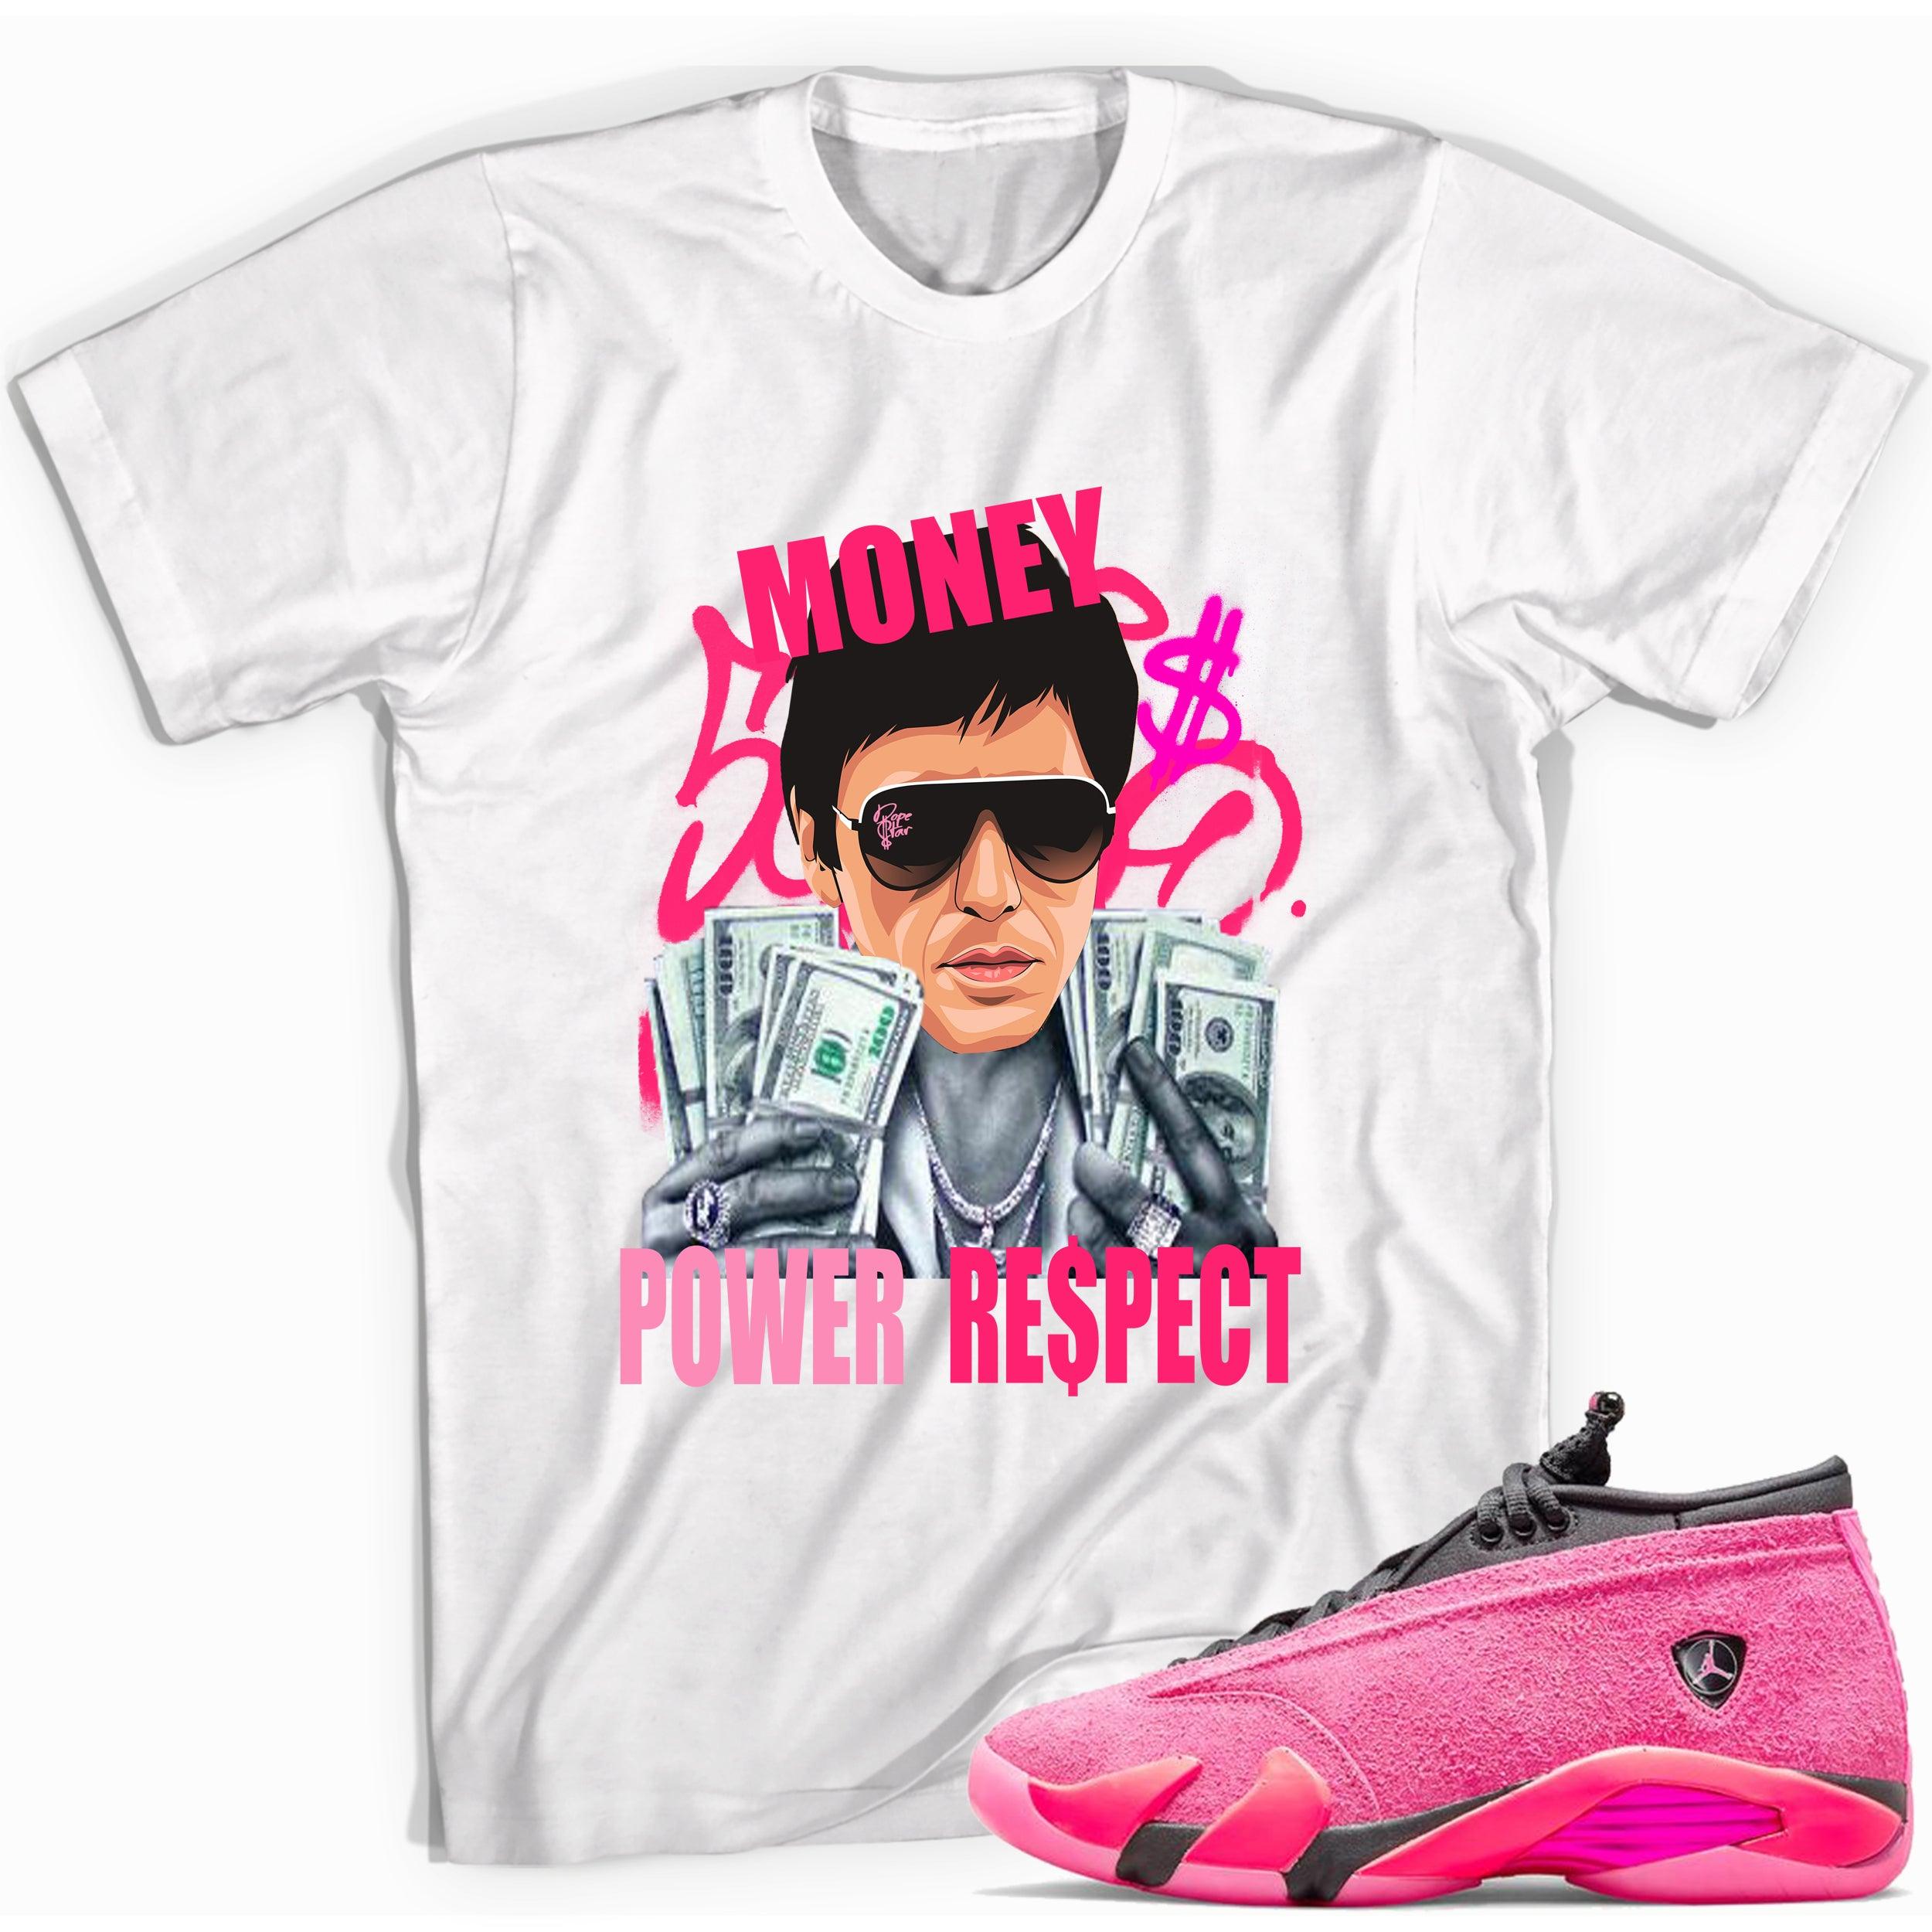 Tony Montana Sneaker Tee AJ 14s Low Shocking Pink photo